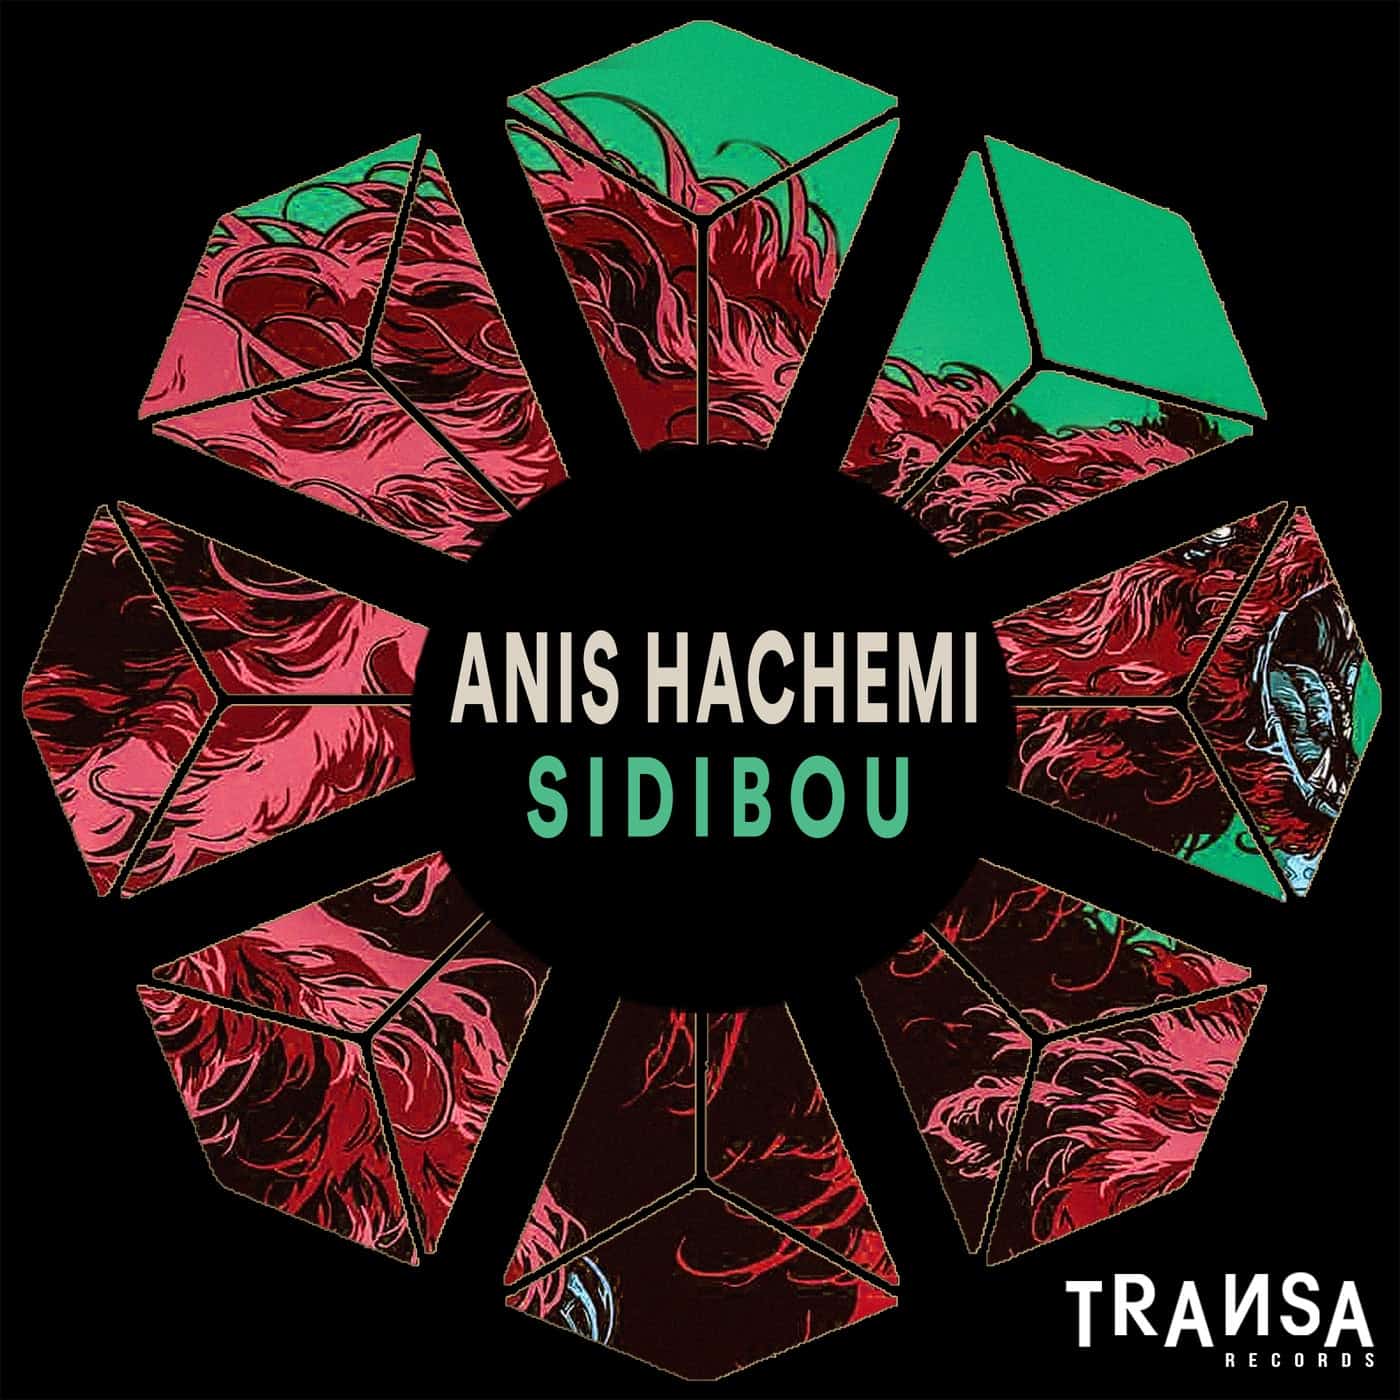 Download Anis hachemi - Sidibou